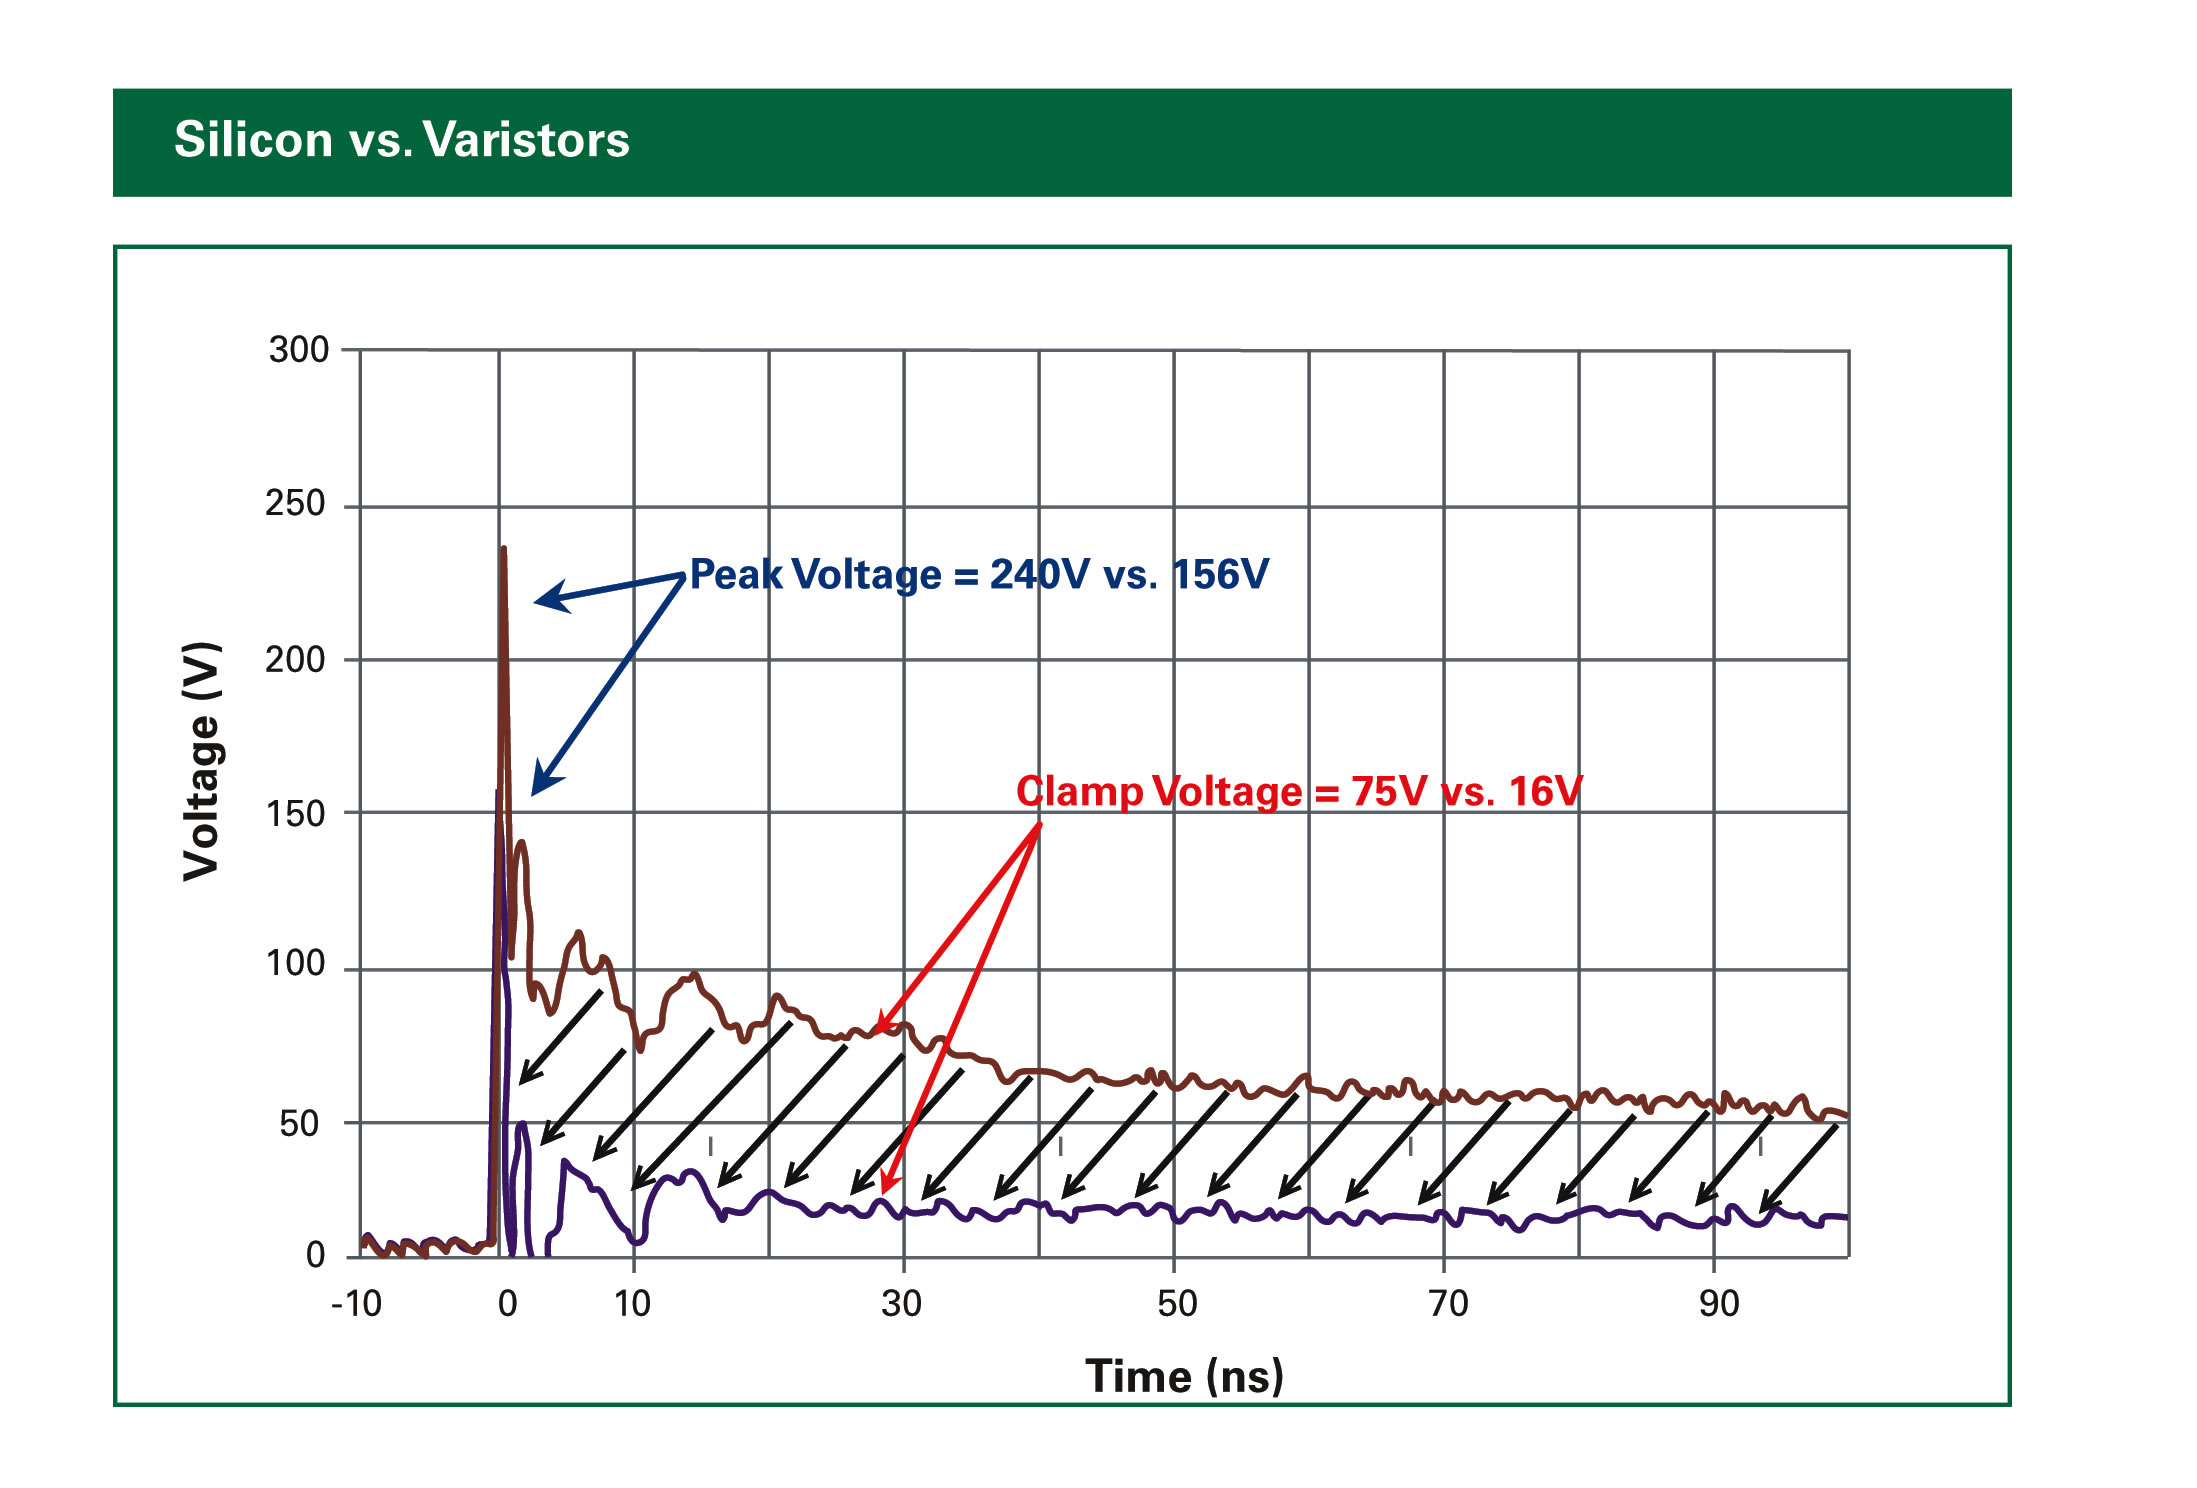 Figure 3: Silicon vs Varistors